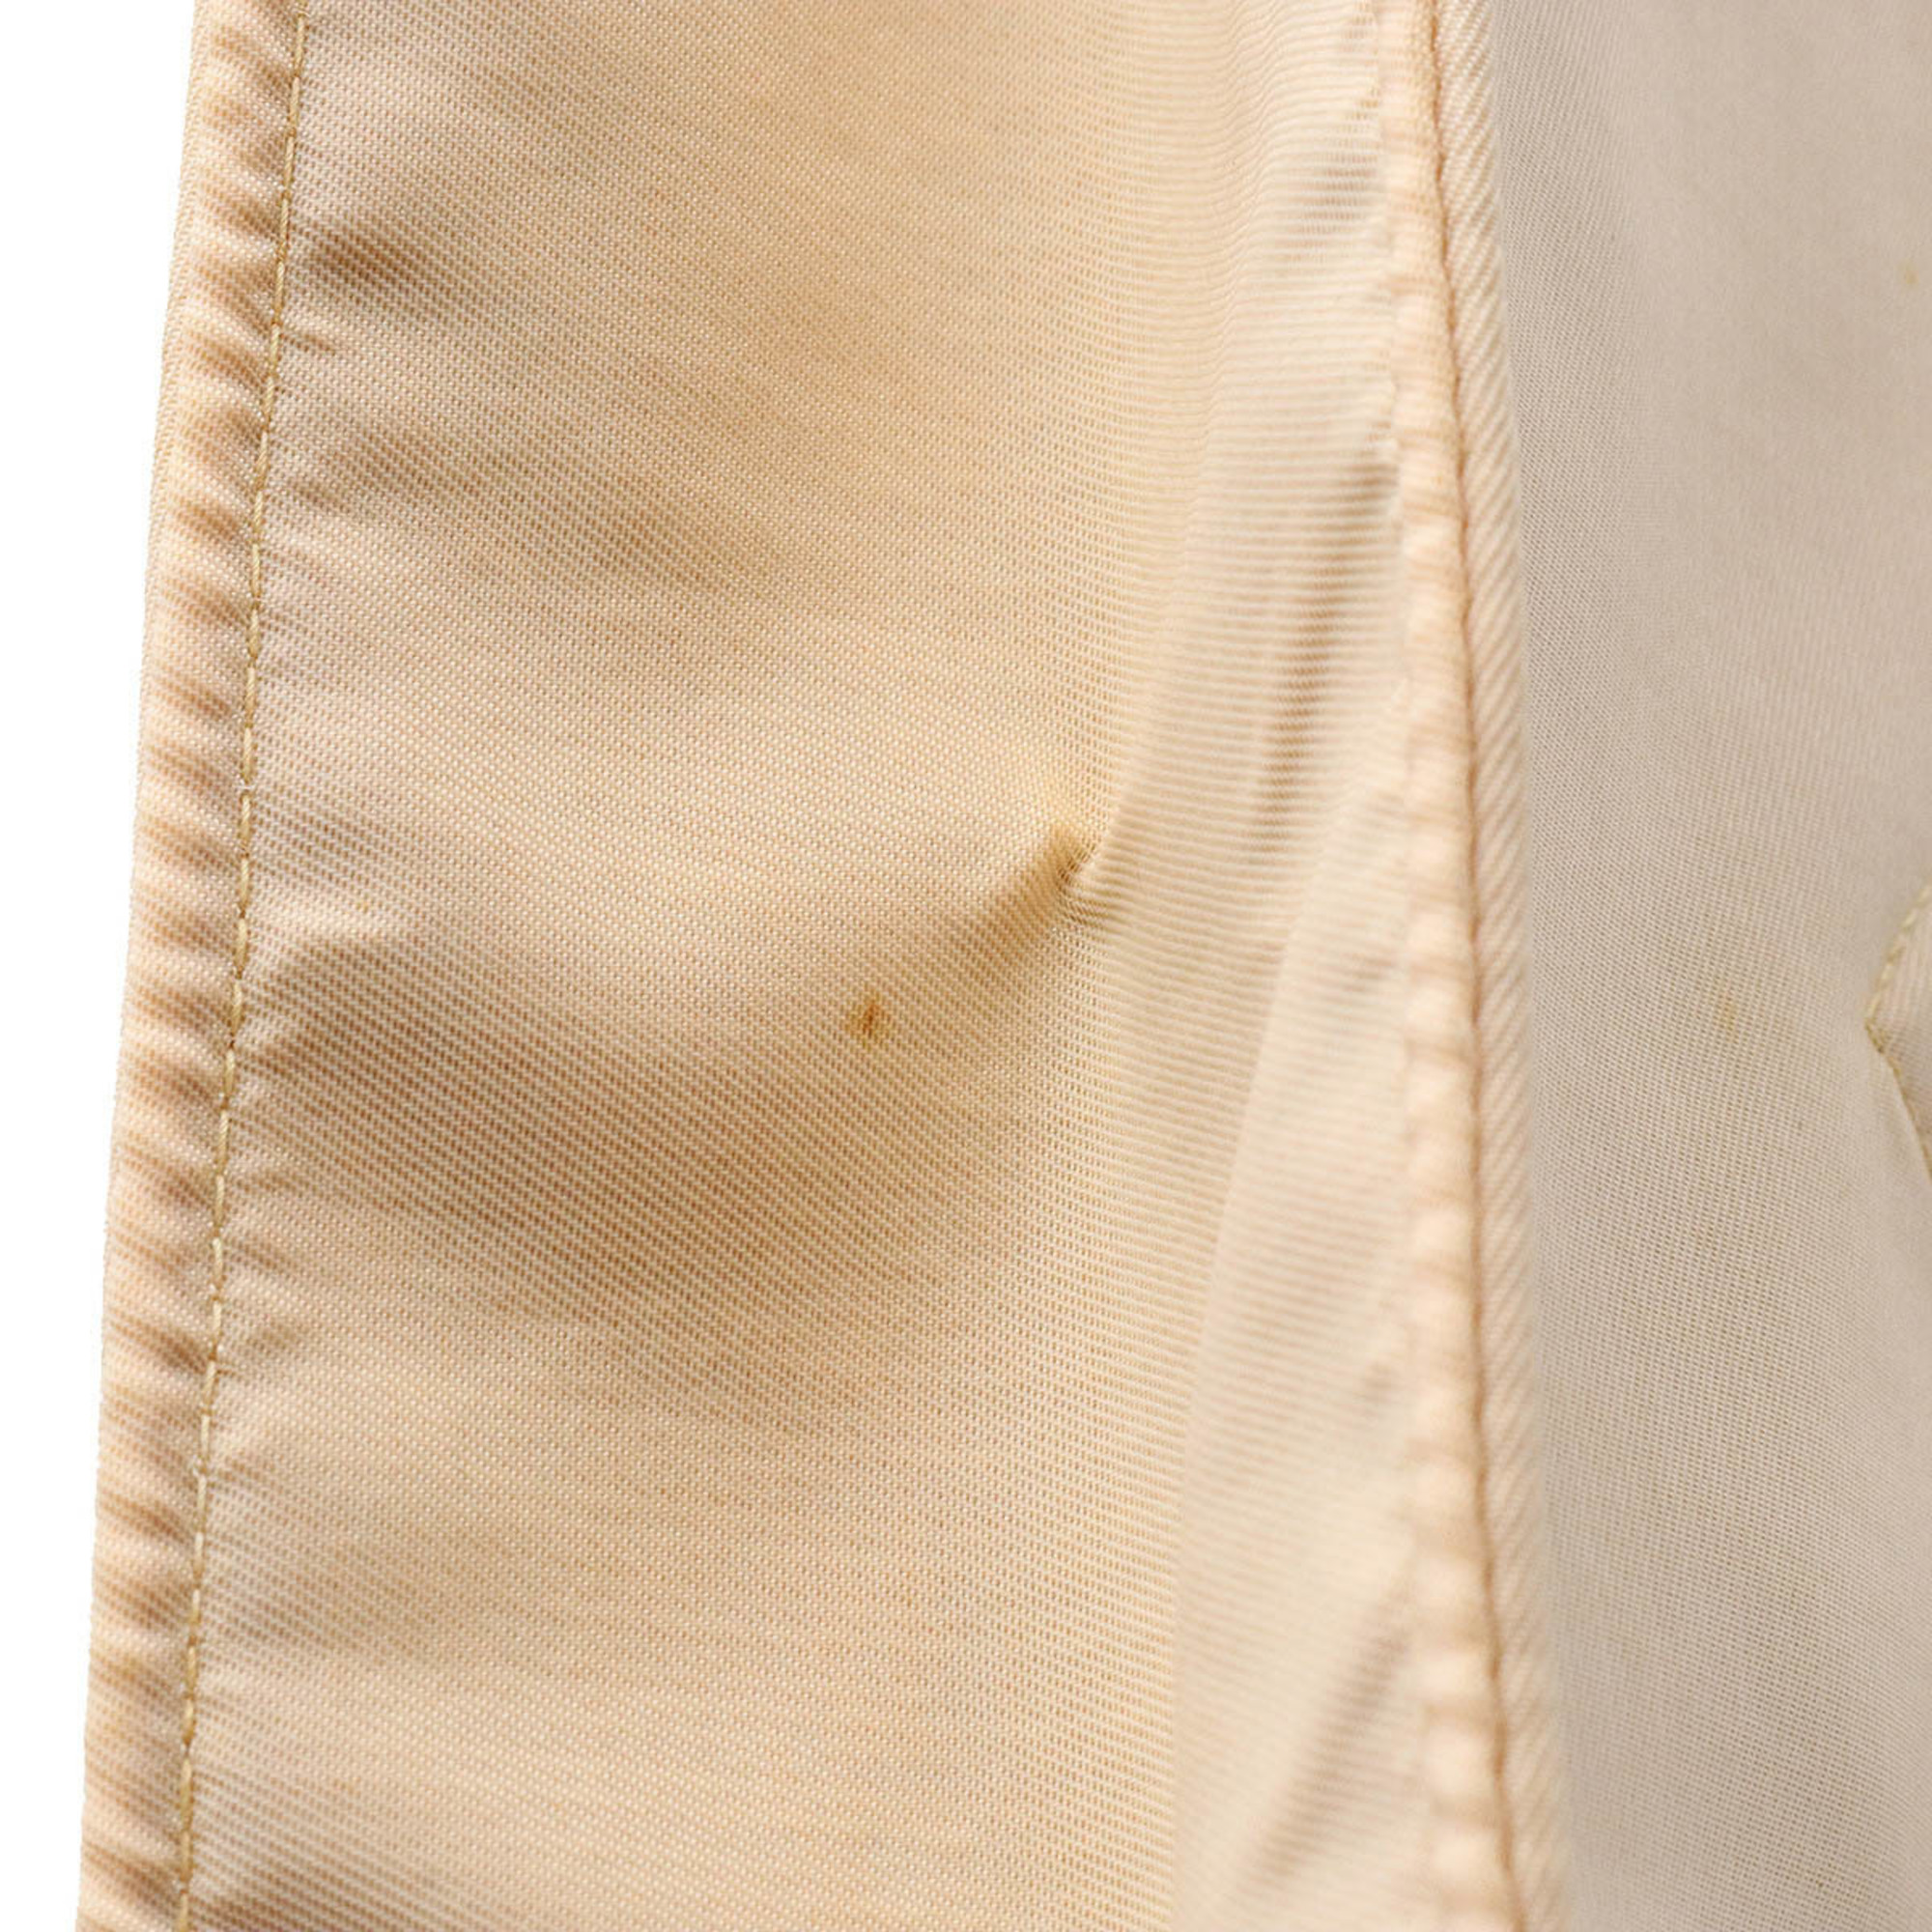 CHANEL Chanel here mark button tote bag handbag nylon light pink beige